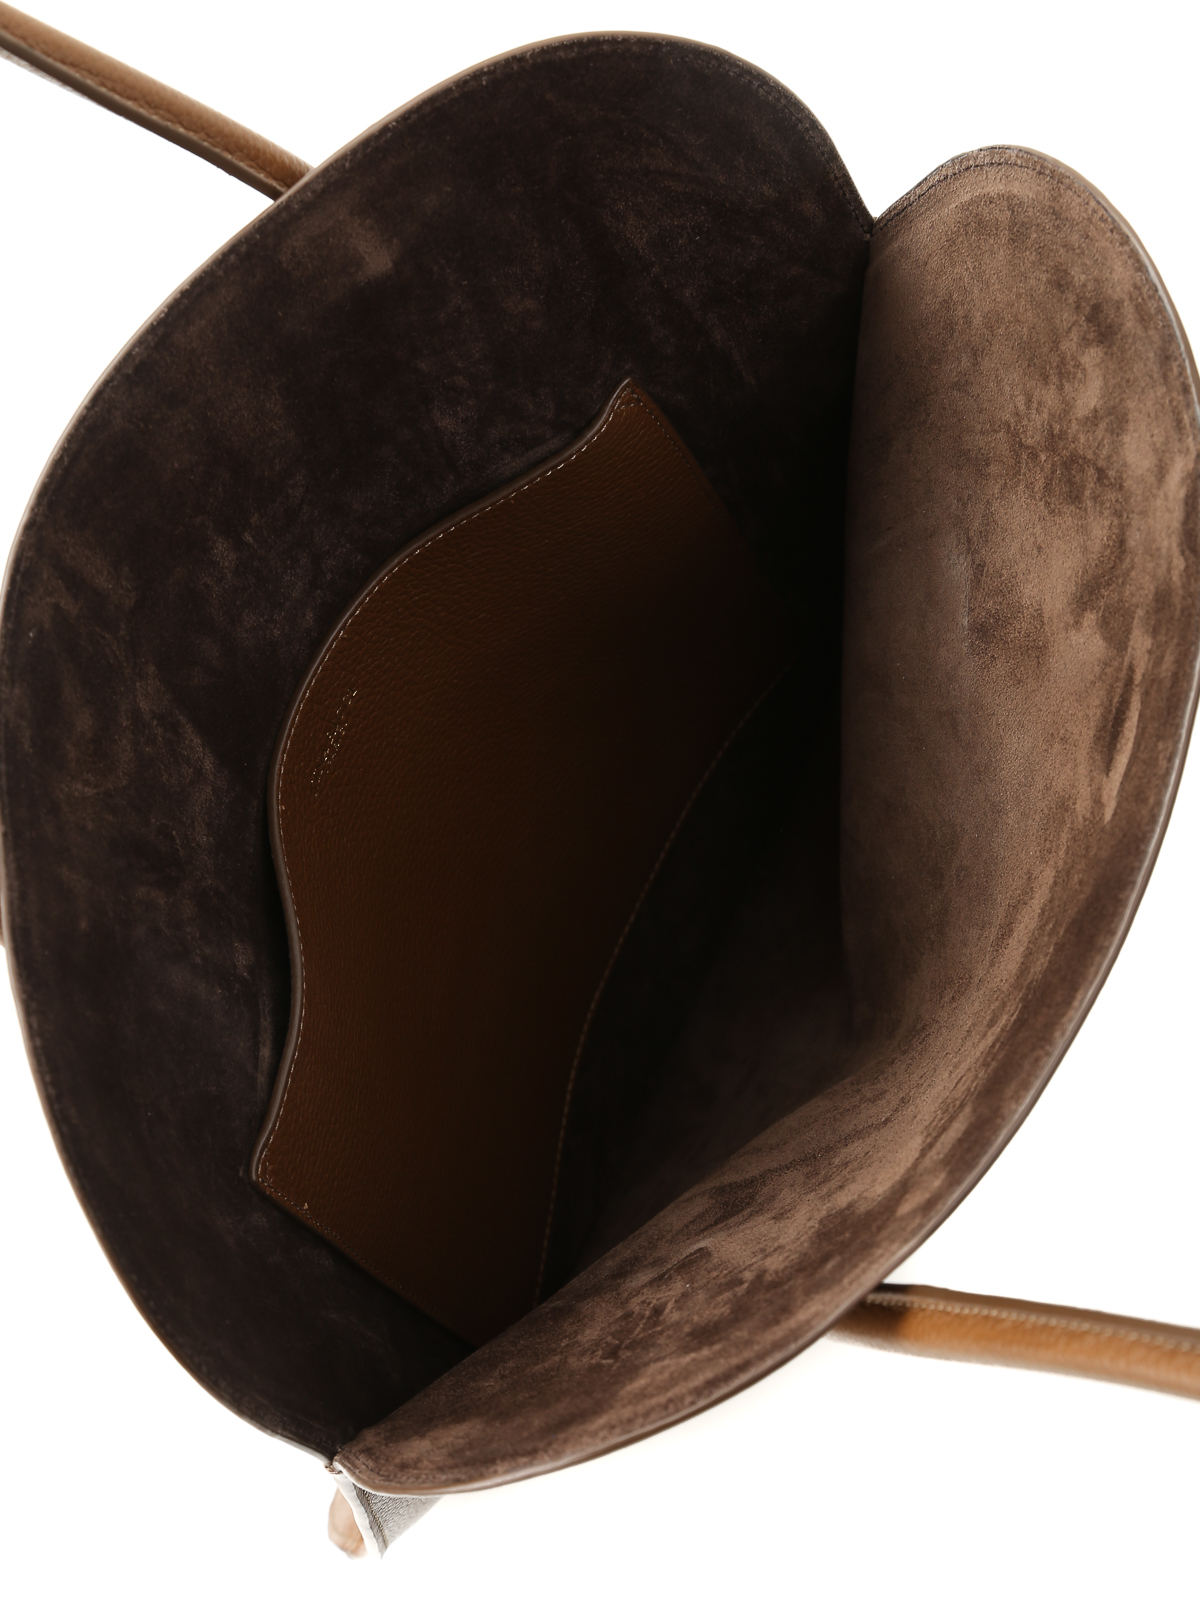 Totes bags Nina Ricci - Irrisor grain leather tote - S0097CLF057U7280